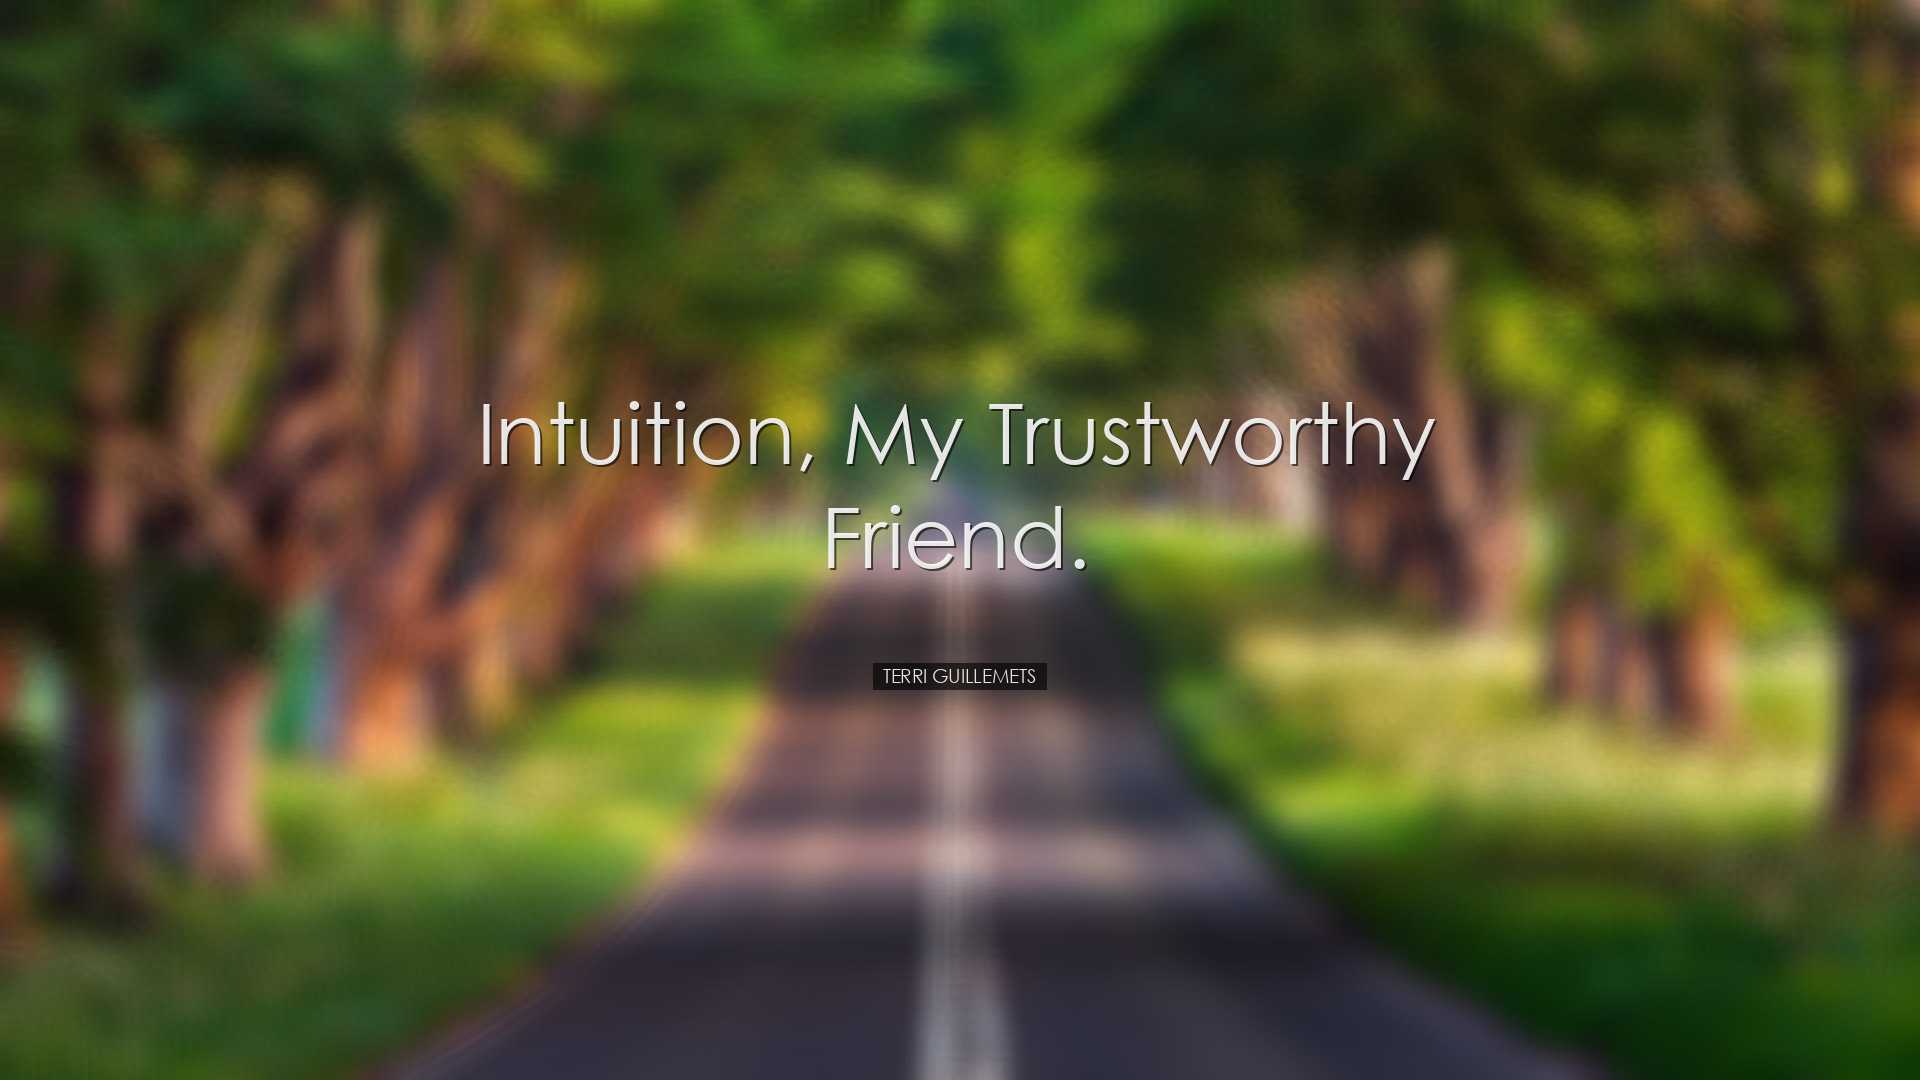 Intuition, my trustworthy friend. - Terri Guillemets